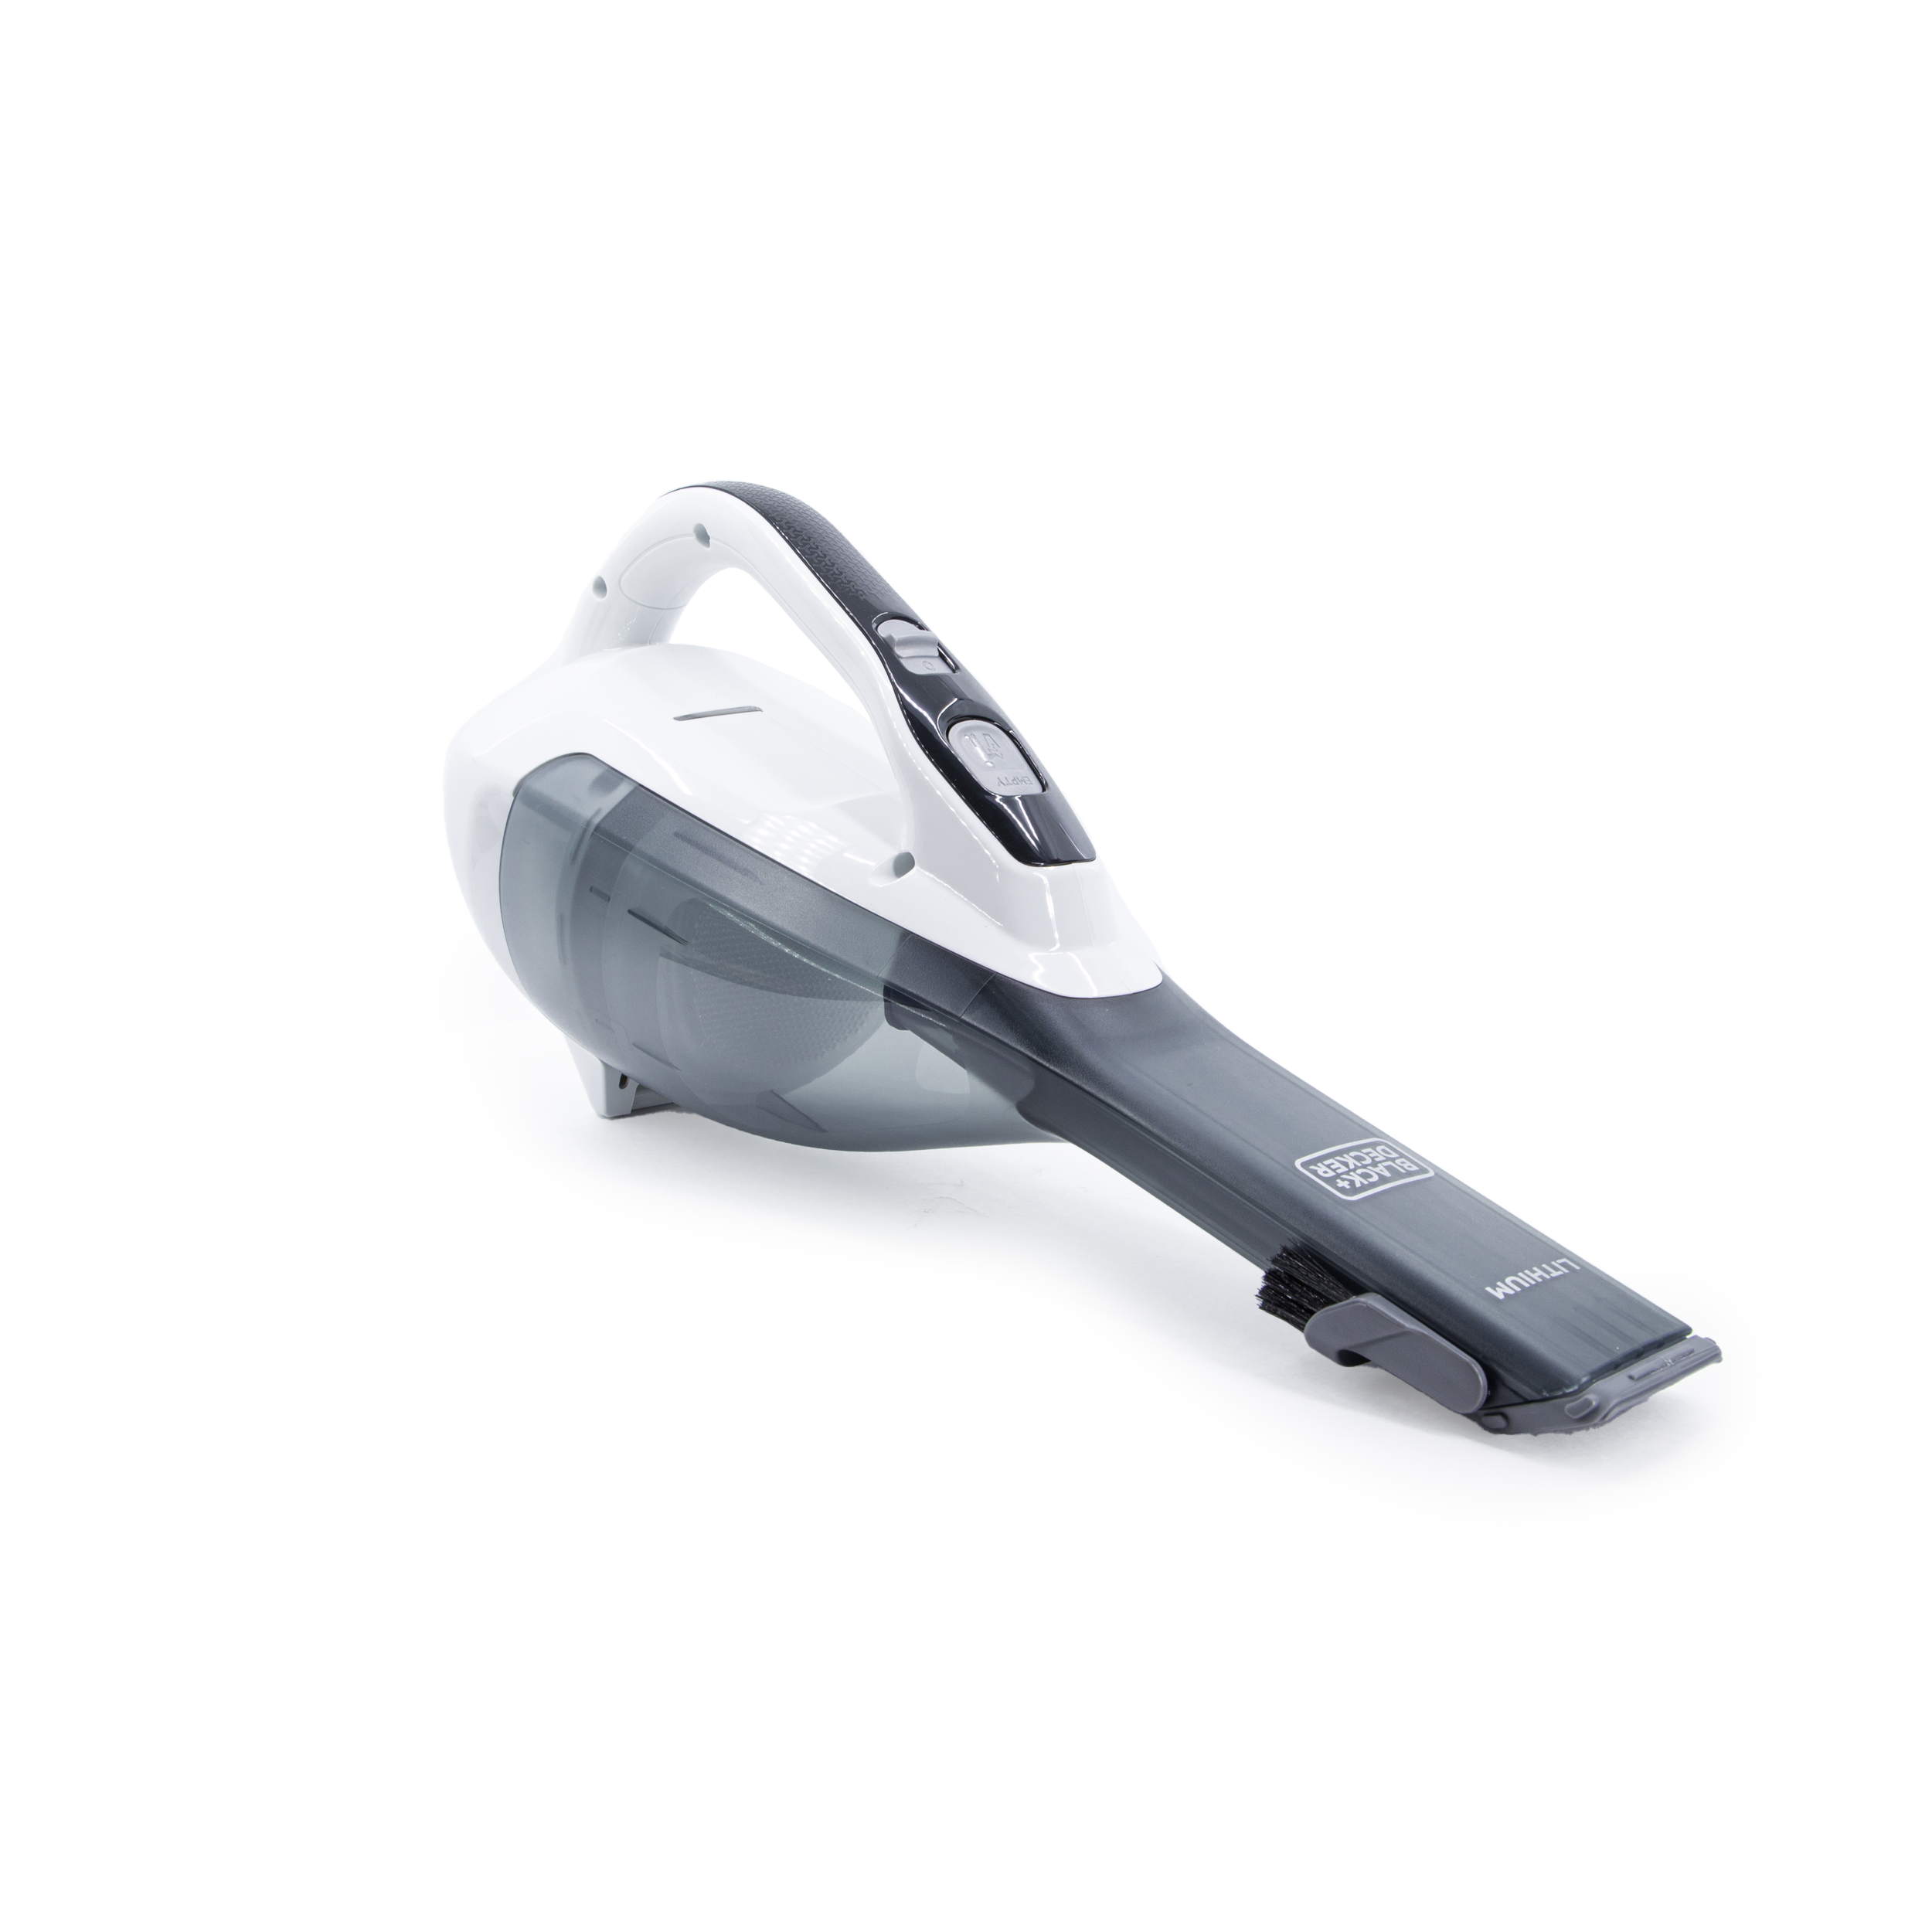 Black & Decker Dustbuster Handheld Cordless Vacuum, White - 9898841